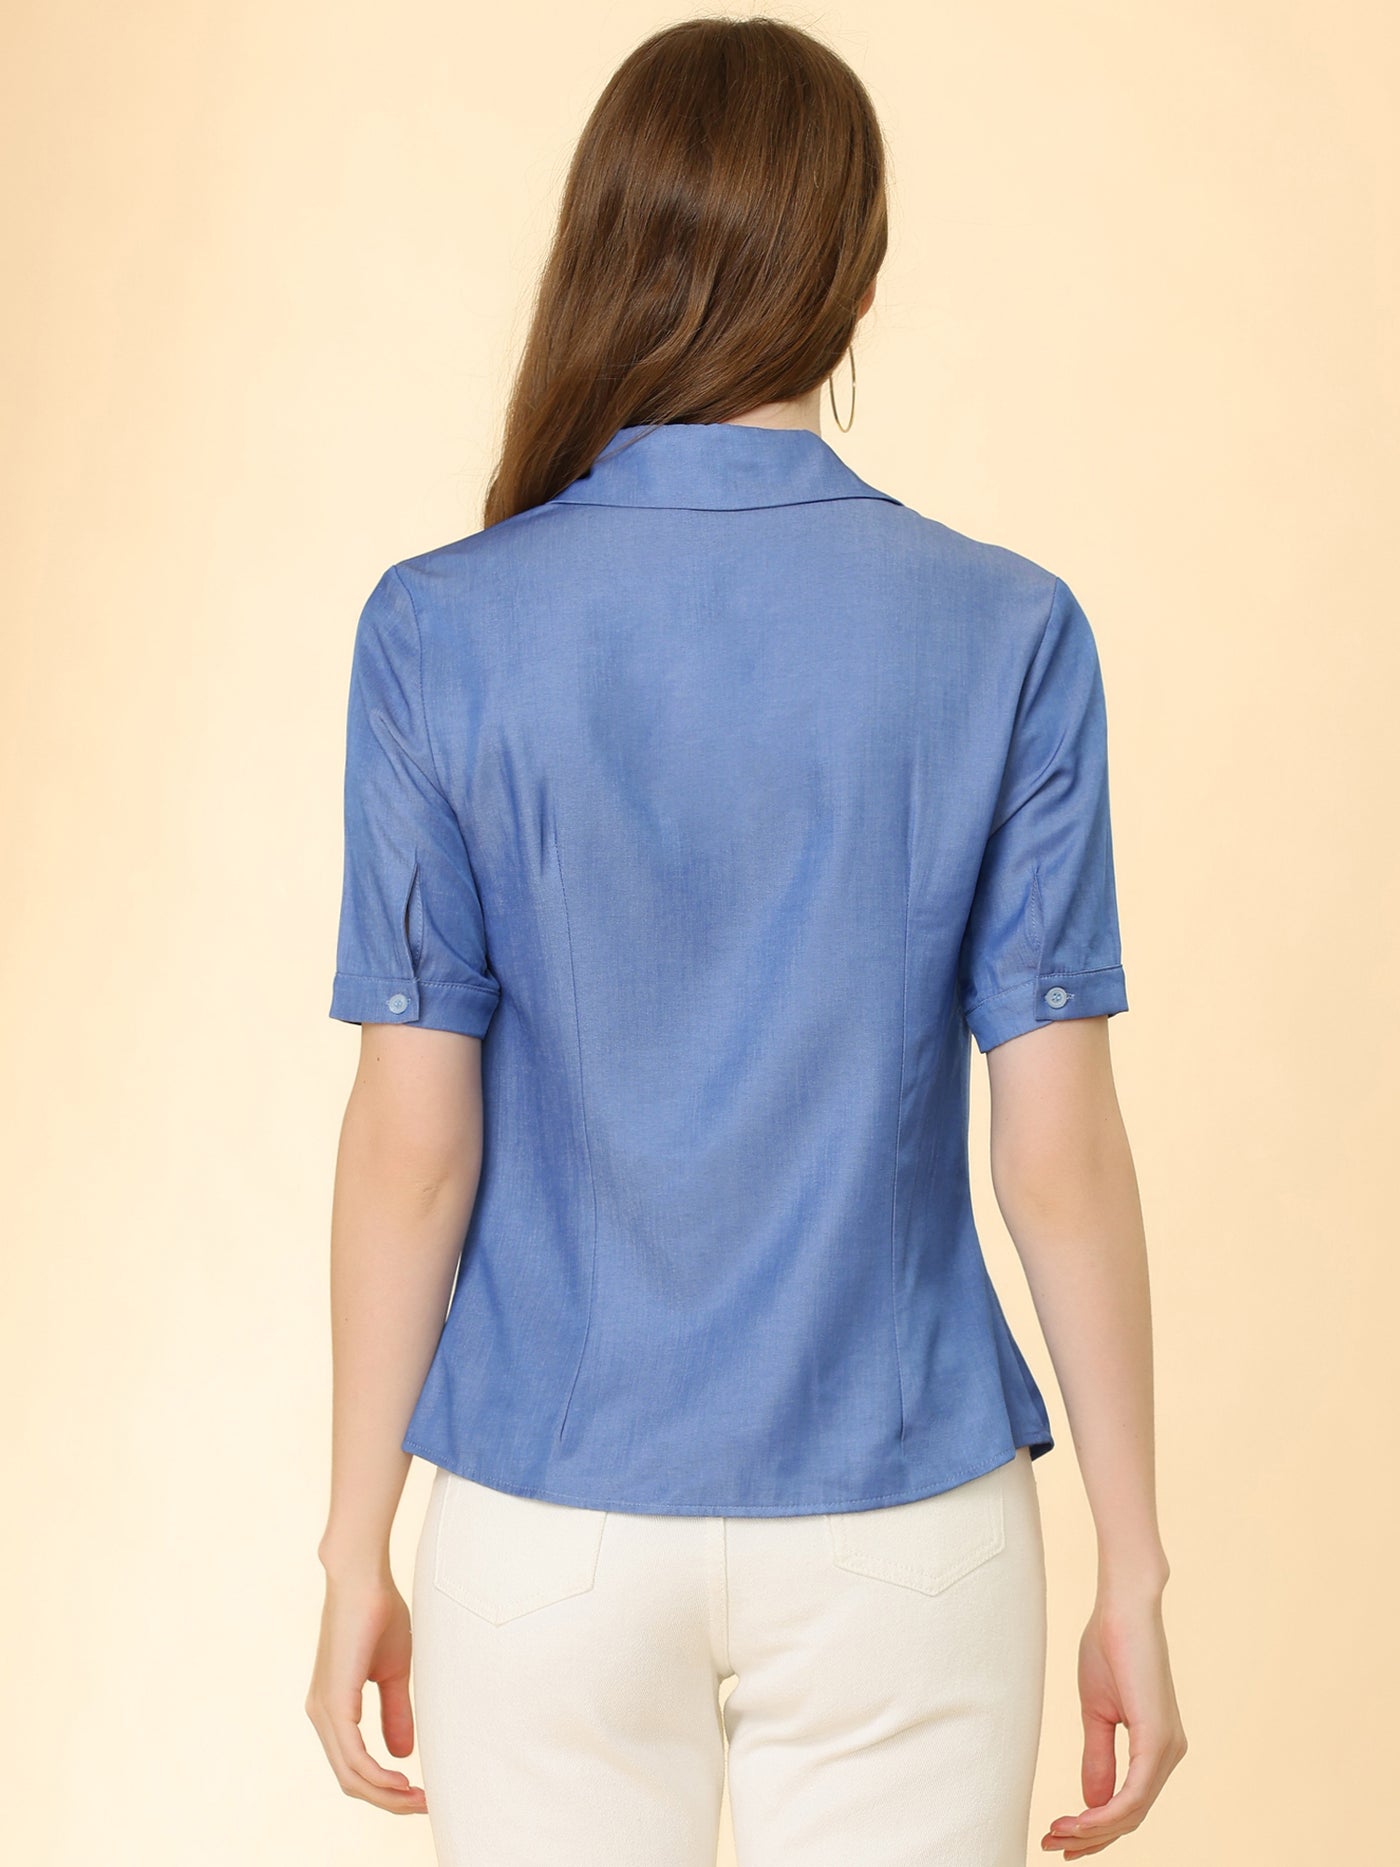 Allegra K Button Down Shirt for Chambray Work Point Collar Denim Tops Blouse